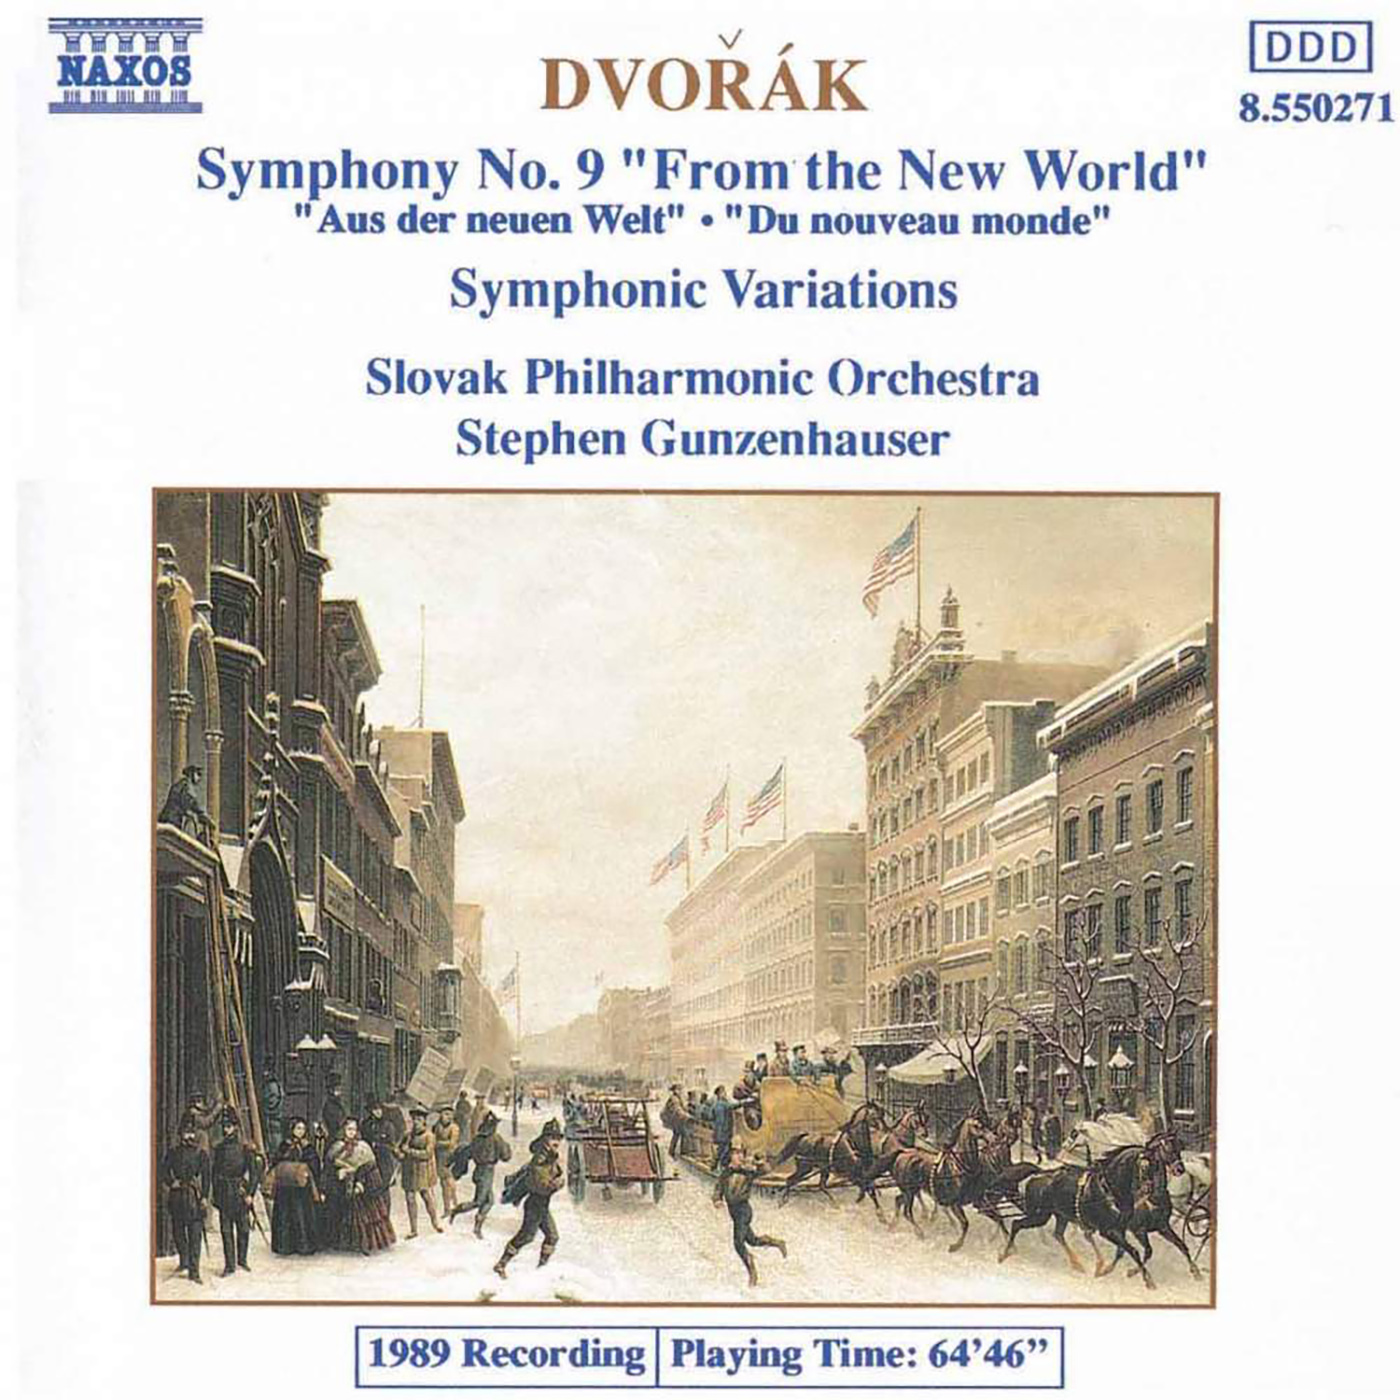 DVORAK, A.: Symphony No. 9, "From the New World" / Symphonic Variations (Slovak Philharmonic, Gunzenhauser)